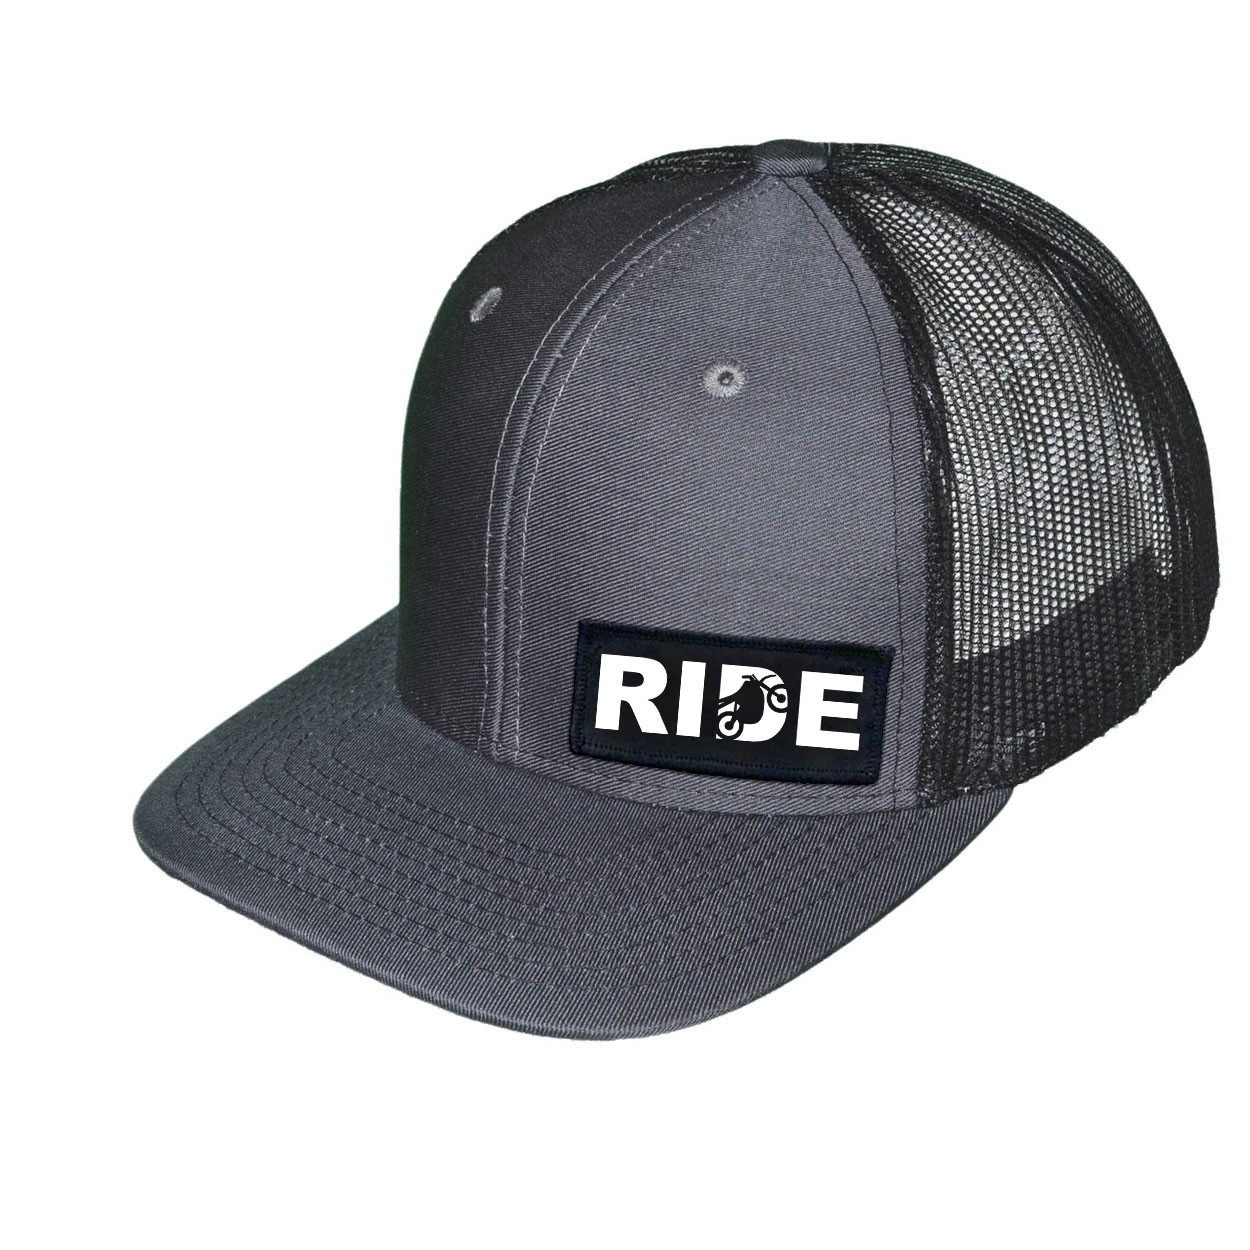 Ride Moto Logo Night Out Woven Patch Snapback Trucker Hat Dark Gray/Black (White Logo)